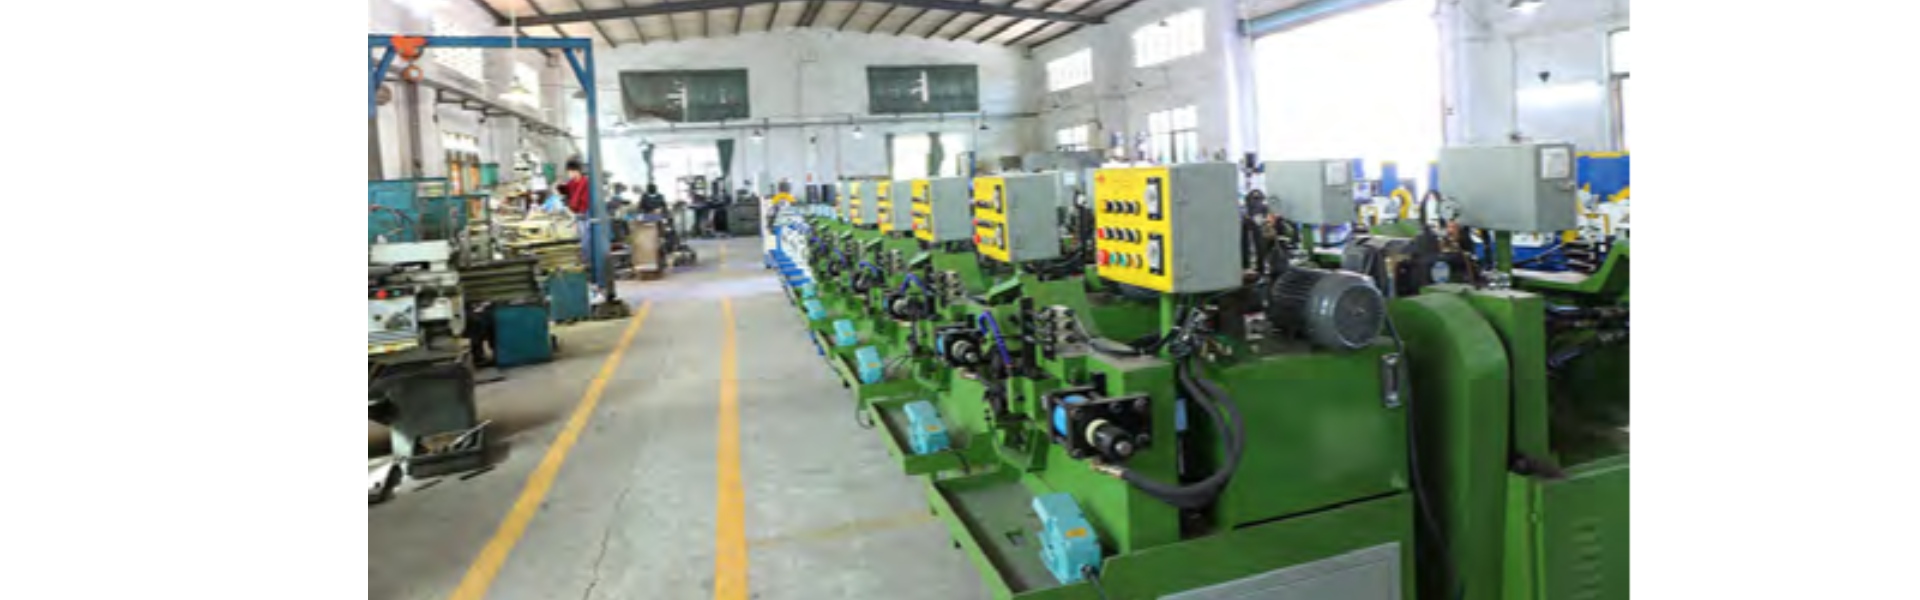 Rollenpassmaschine, automatische Rohrschneidemaschine, vollautomatische Zahnwalze,Dongguan Hongbo Precision Machinery Manufacturing Co.,Ltd.